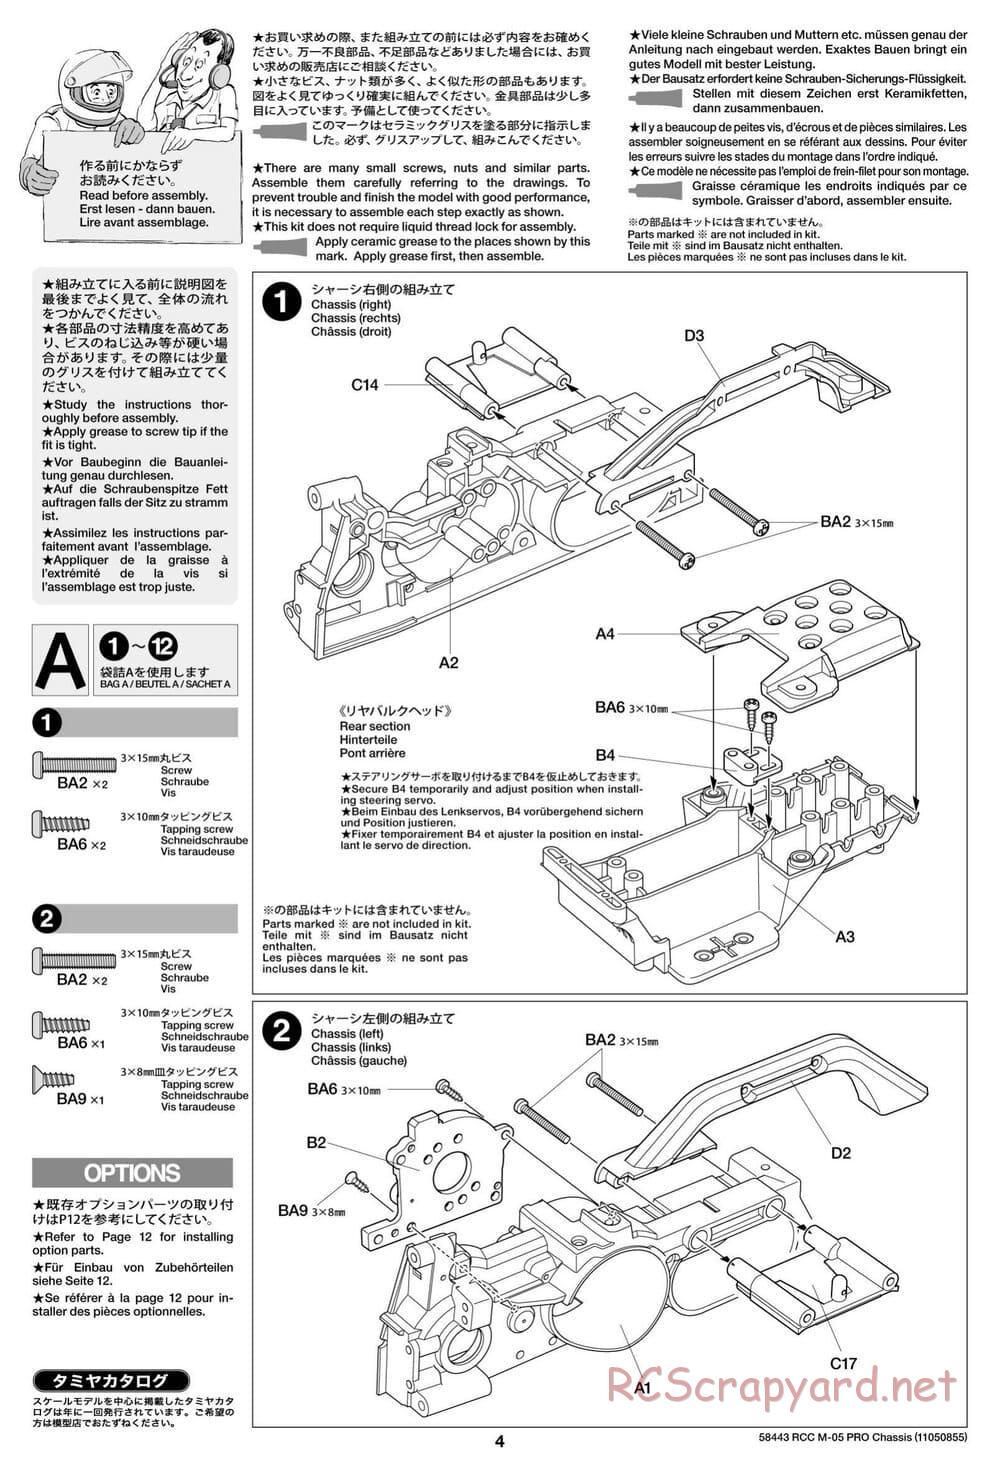 Tamiya - M05-Pro Chassis - Manual - Page 4